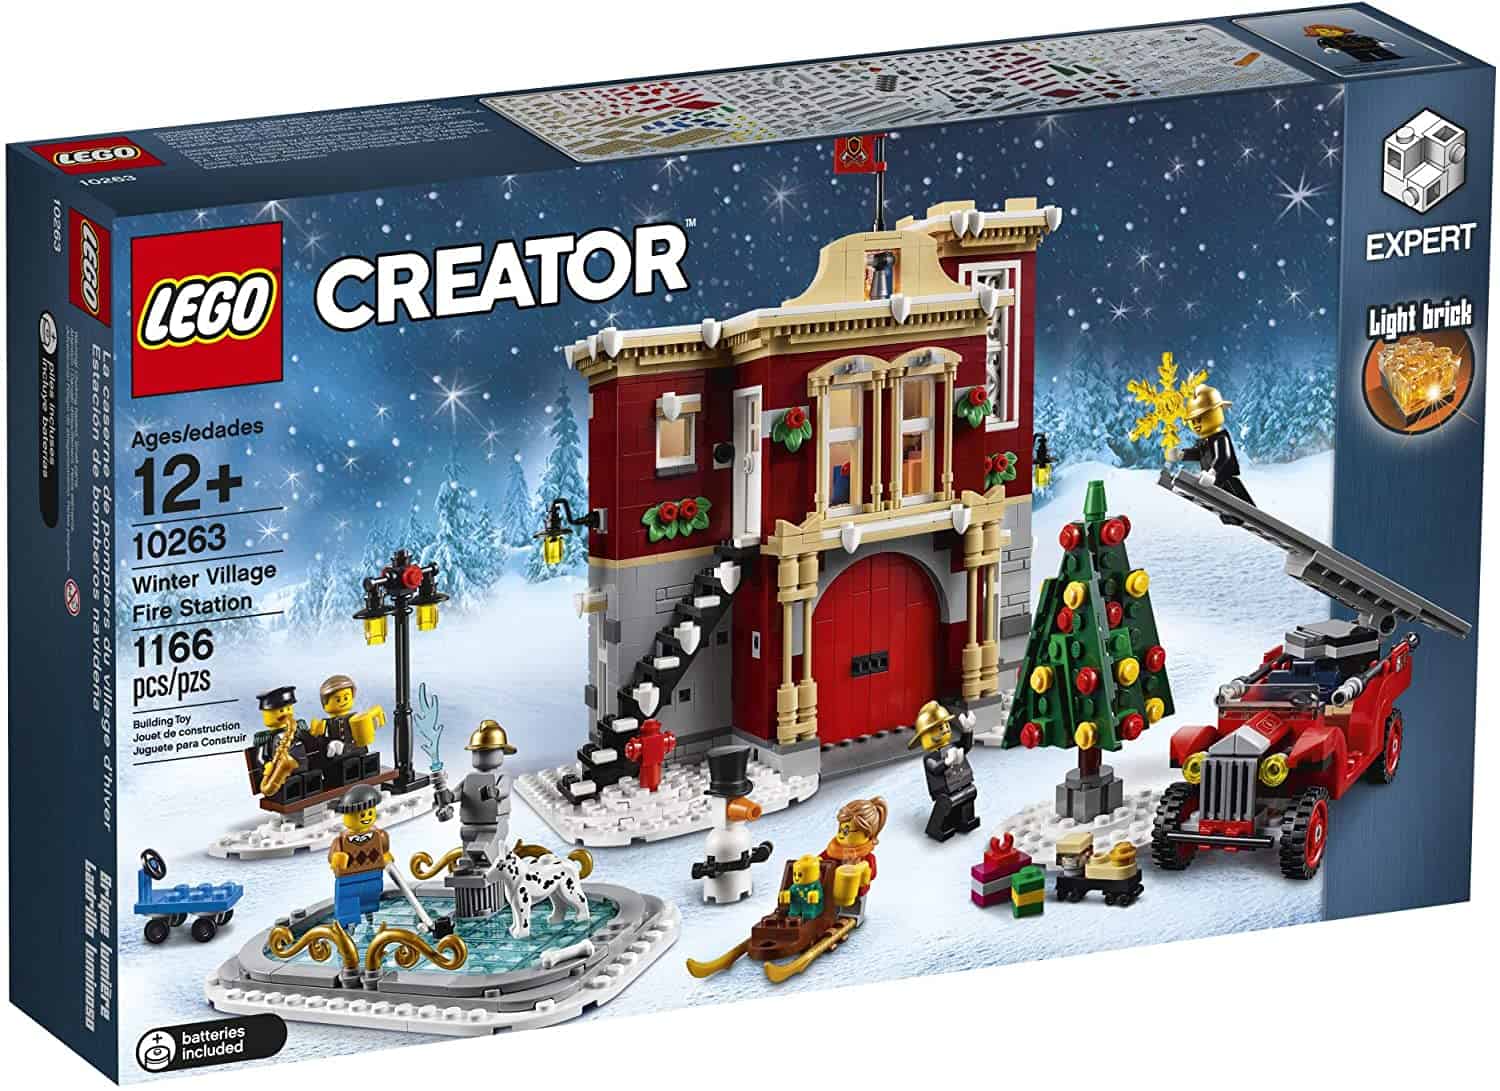 Best winter emergency services: LEGO Creator Expert Fire station in winter village 10263